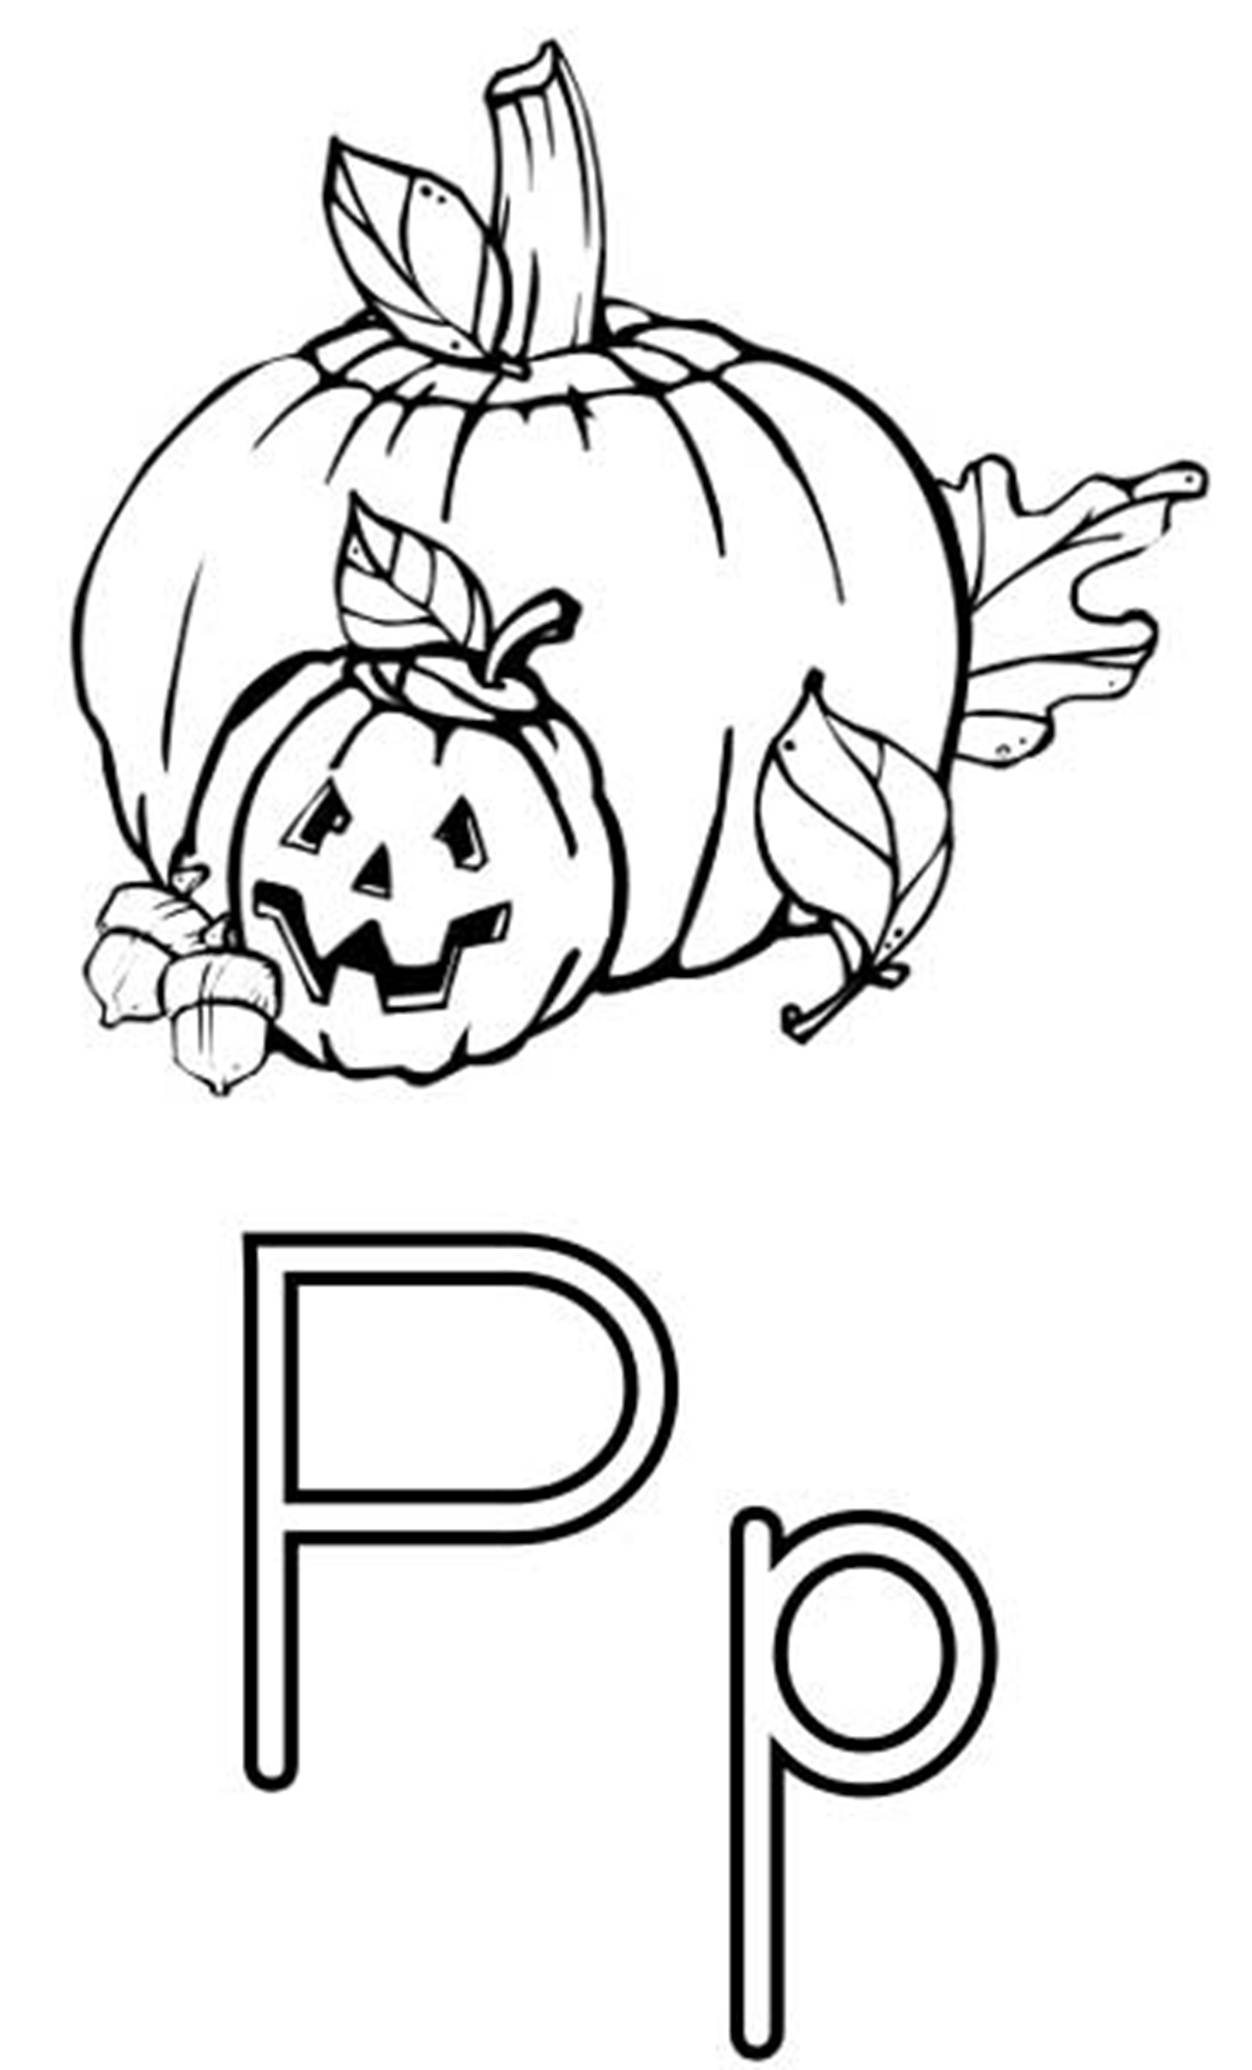 coloring-pages-pumpkin-pie-at-getcolorings-free-printable